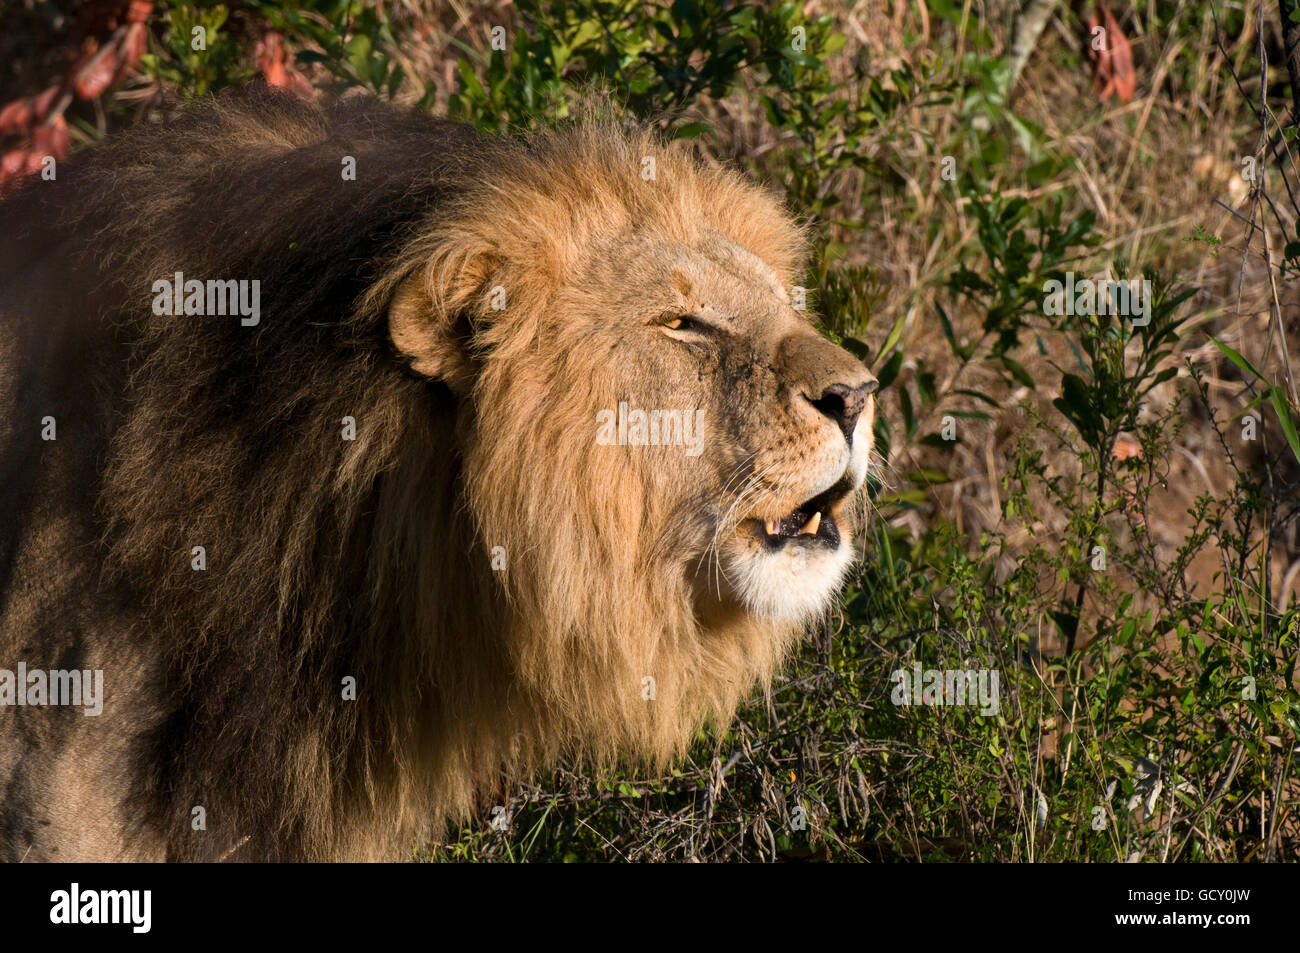 Roaring lion (Panthera leo), Masai Mara National Reserve, Kenya, Africa Banque D'Images